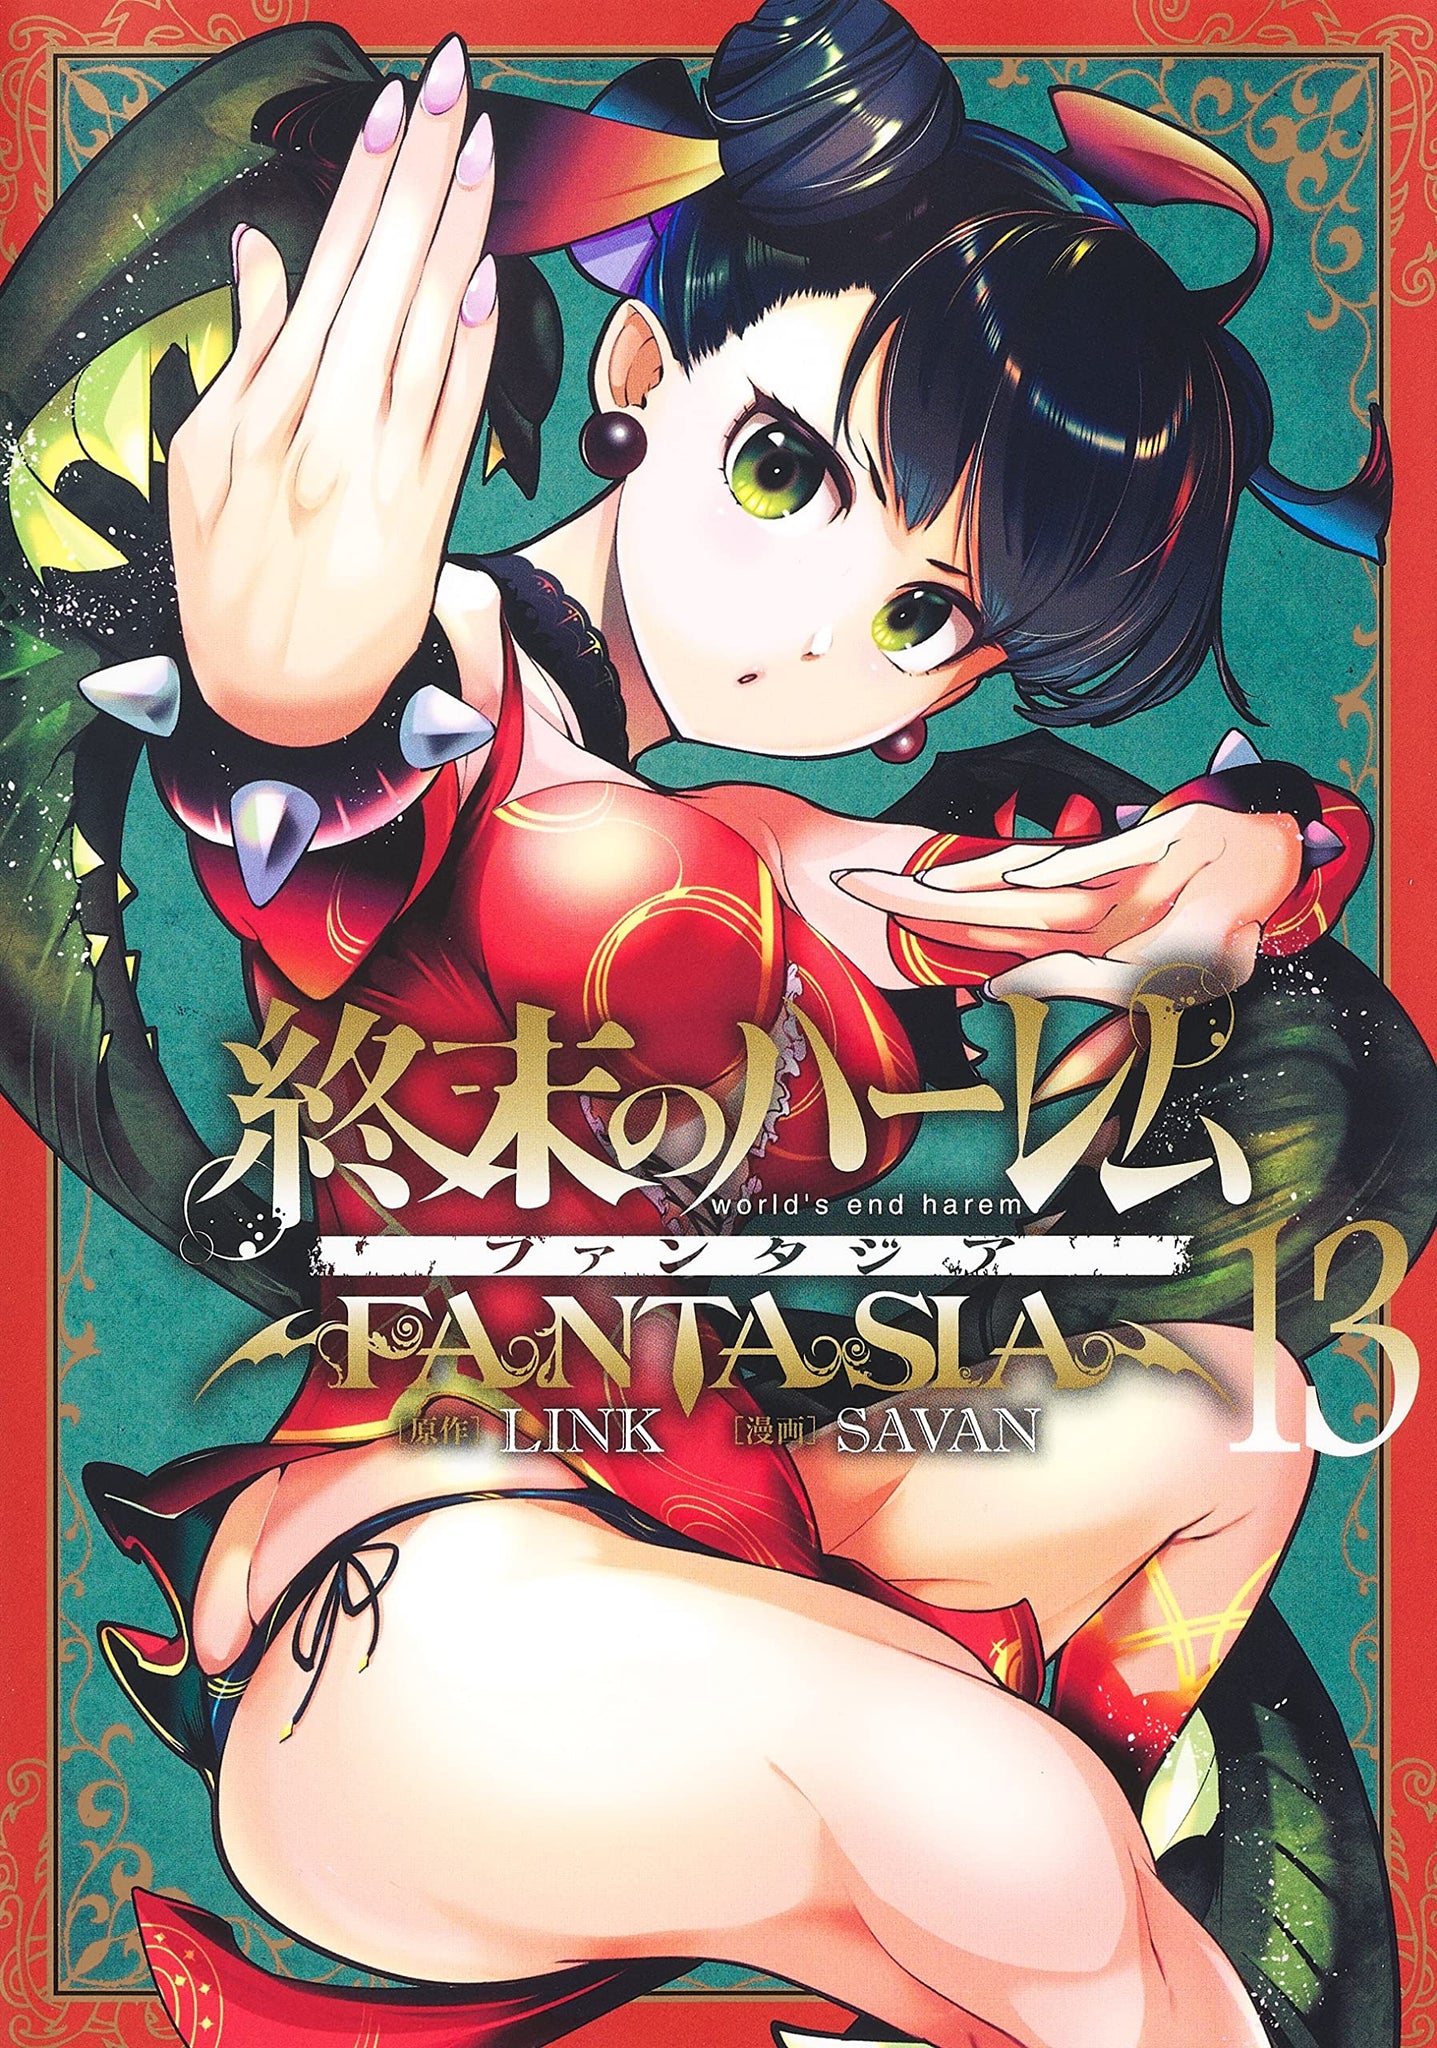 ART] Shuumatsu no Harem - Fantasia - Volume 4 Cover : r/manga